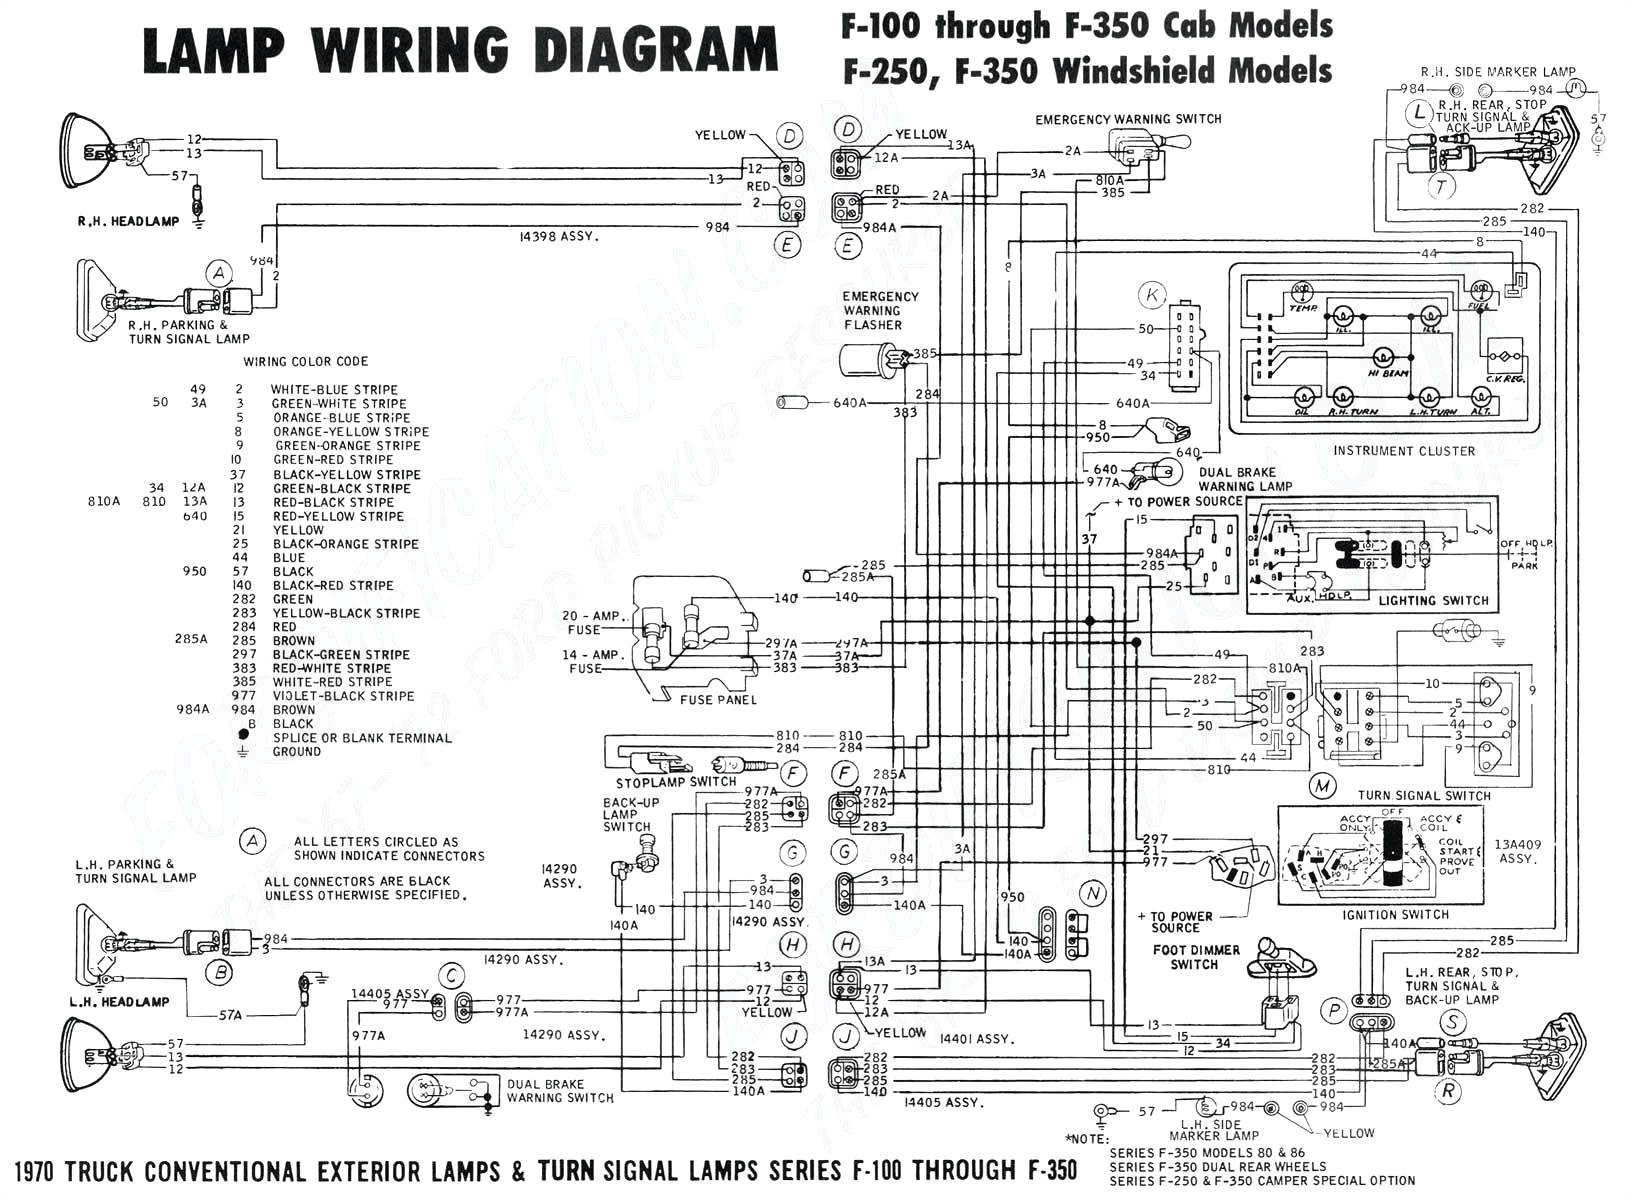 Definition Of Wiring Diagram Labeled Engine Diagram Lovely Engine Belt Diagram New original Parts